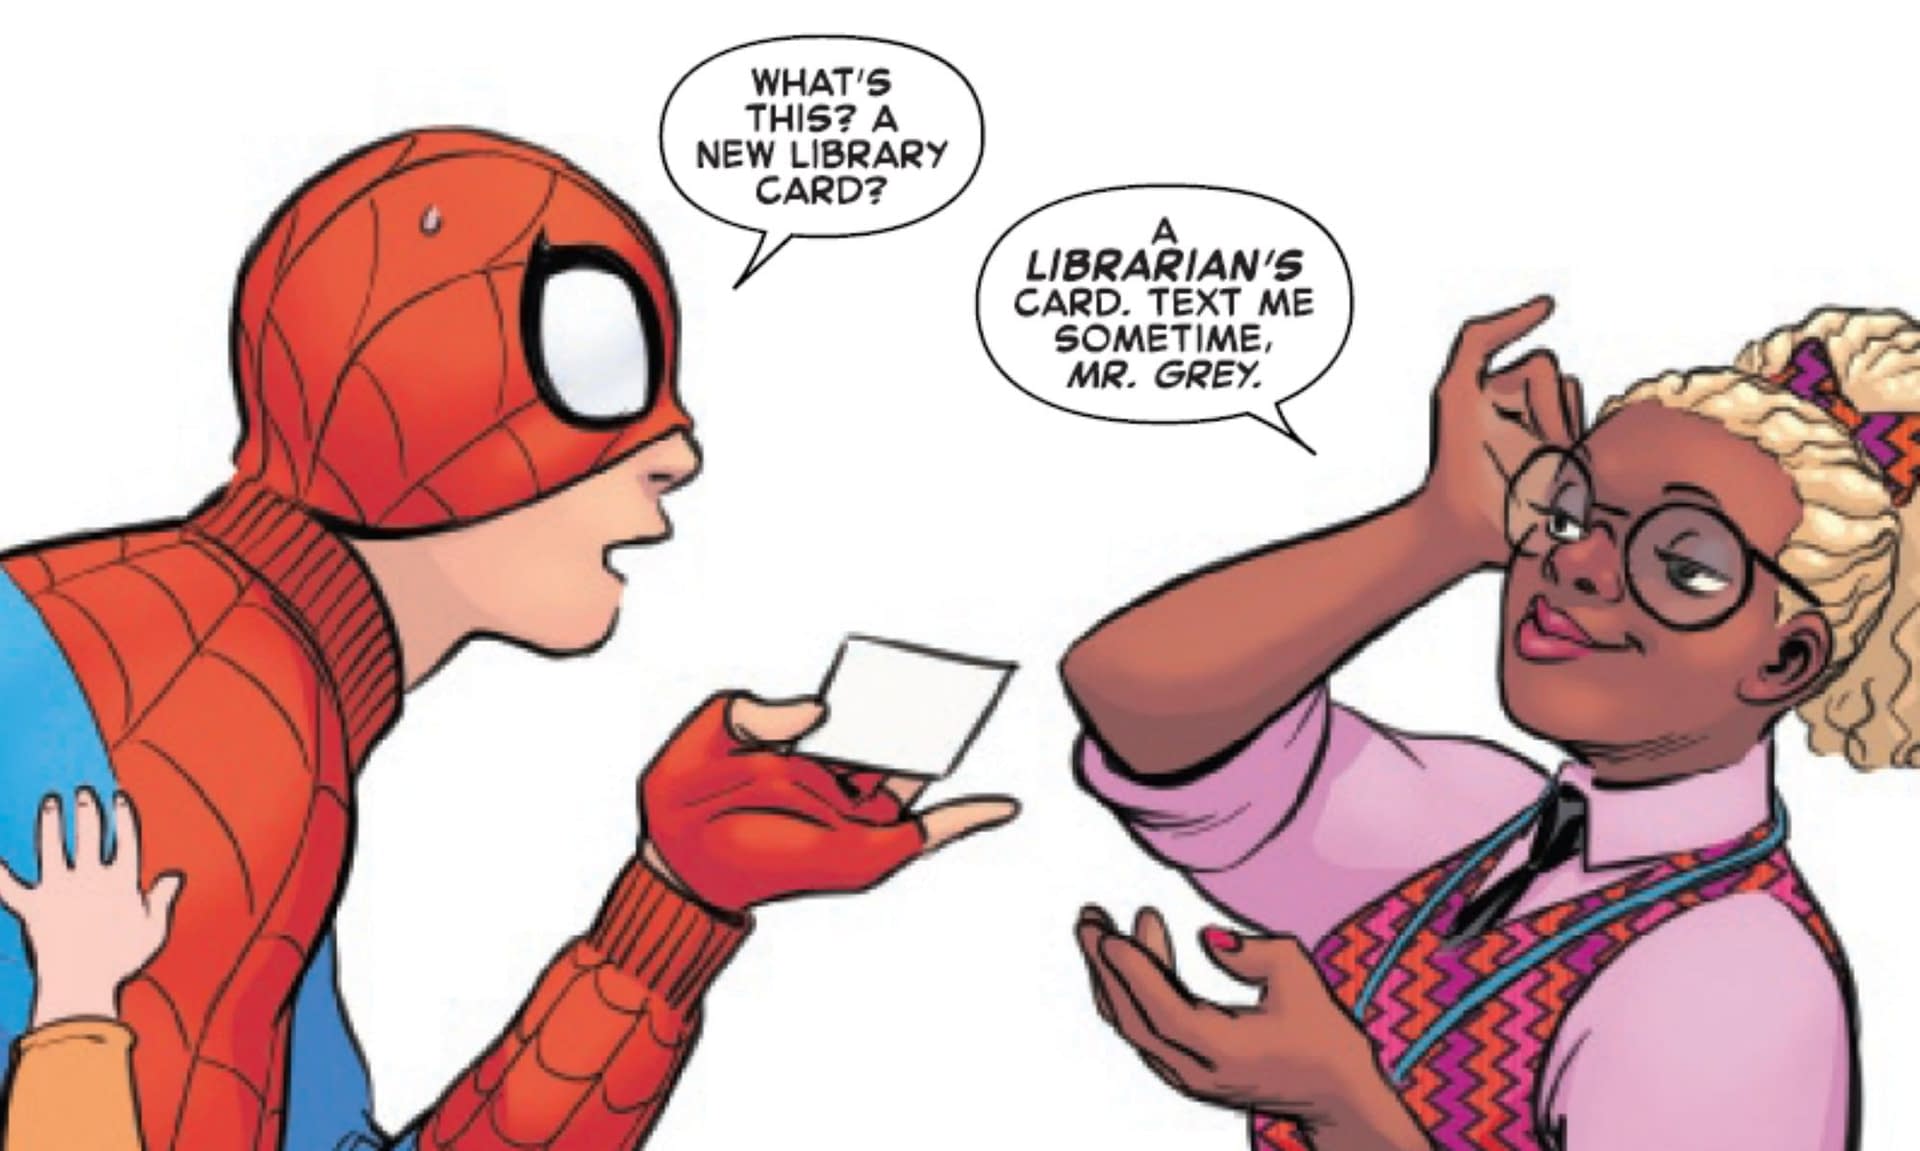 Amazing Spider-Man atinge 900 edições! – Fala, Animal!